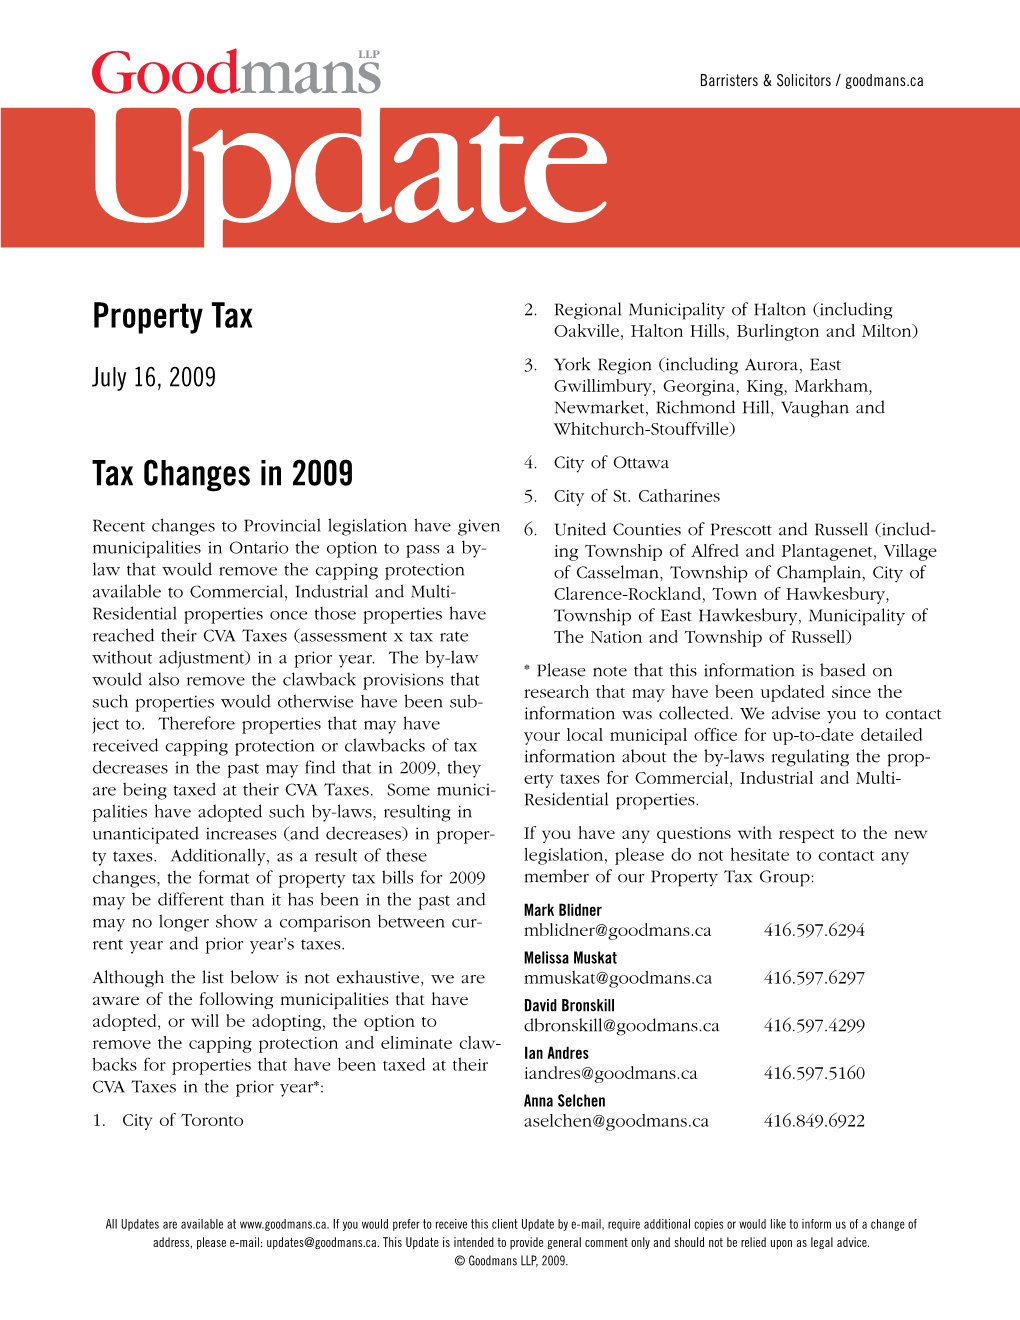 Property Tax Oakville, Halton Hills, Burlington and Milton) 3